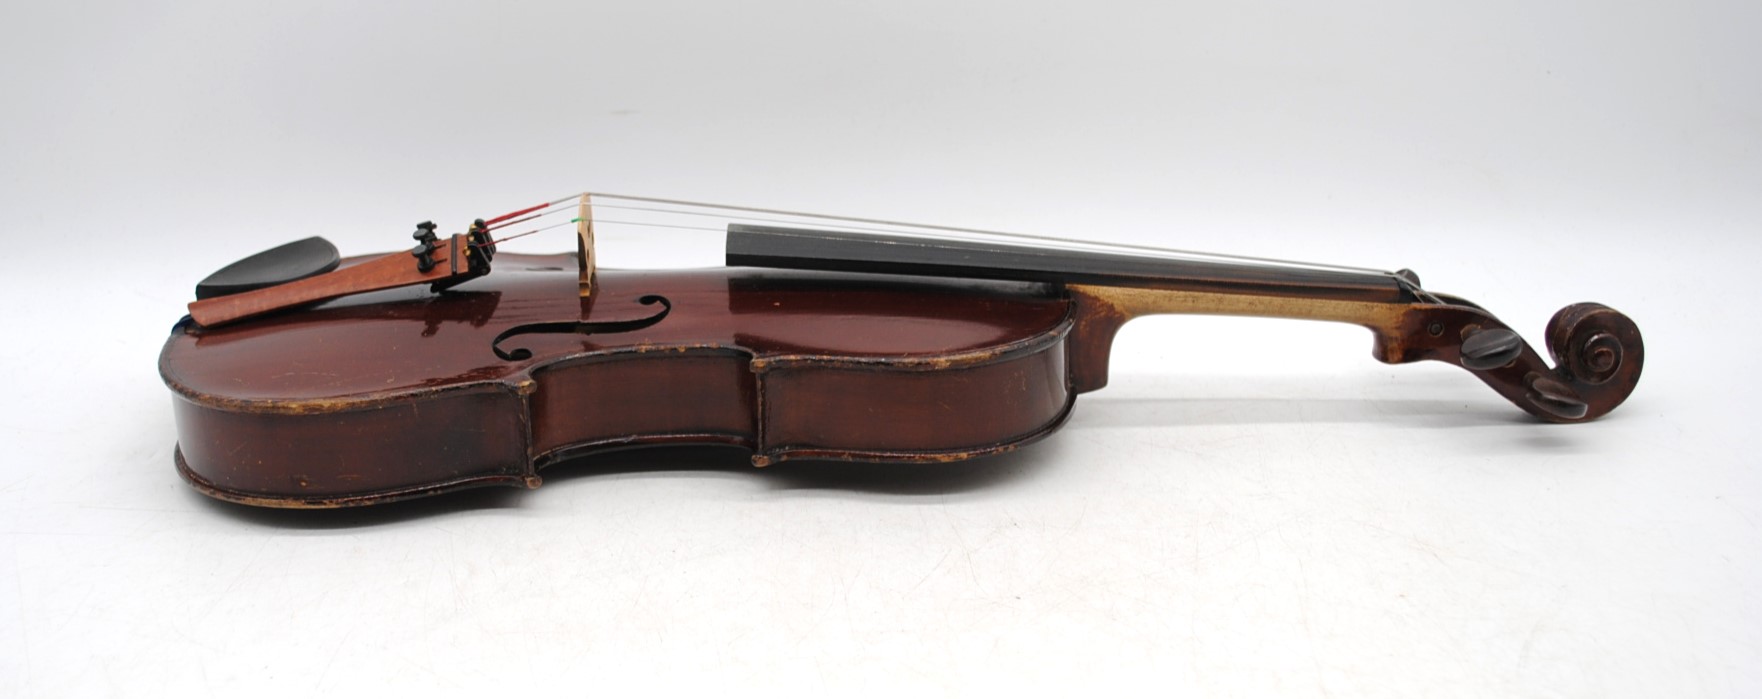 A 3/4 size violin, with Skylark Brand hard case - length of violin 56cm - Image 9 of 12